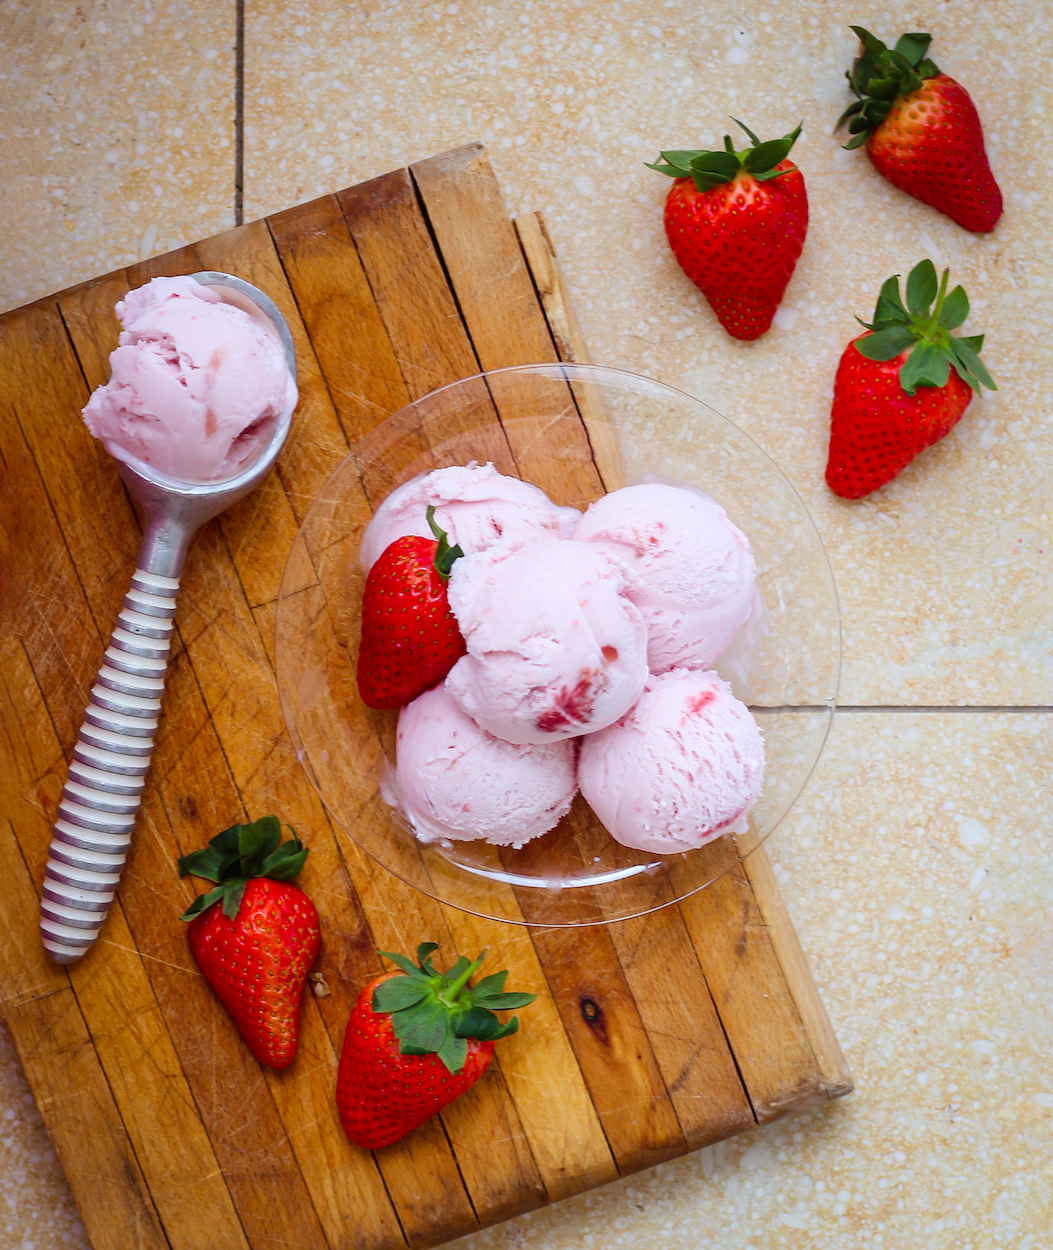 Marshfield Farm Plant Based Strawberry Ice Cream